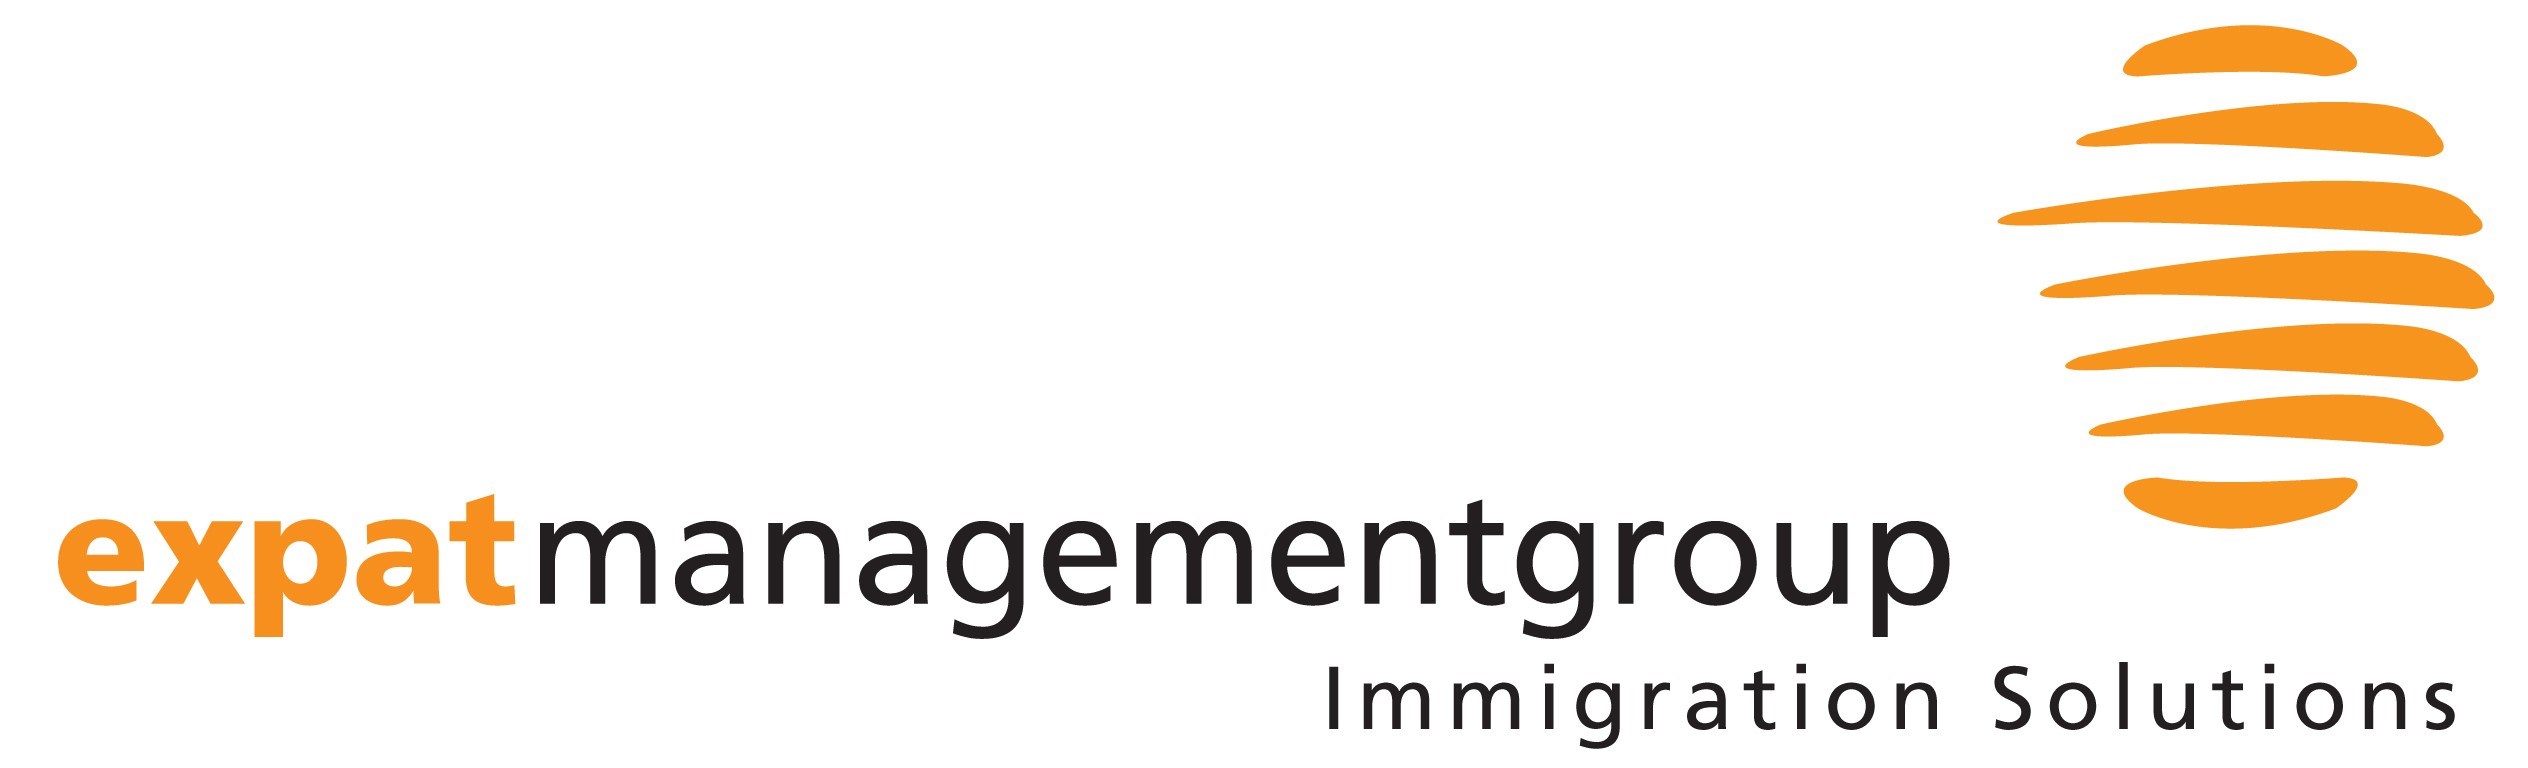 expat management group logo